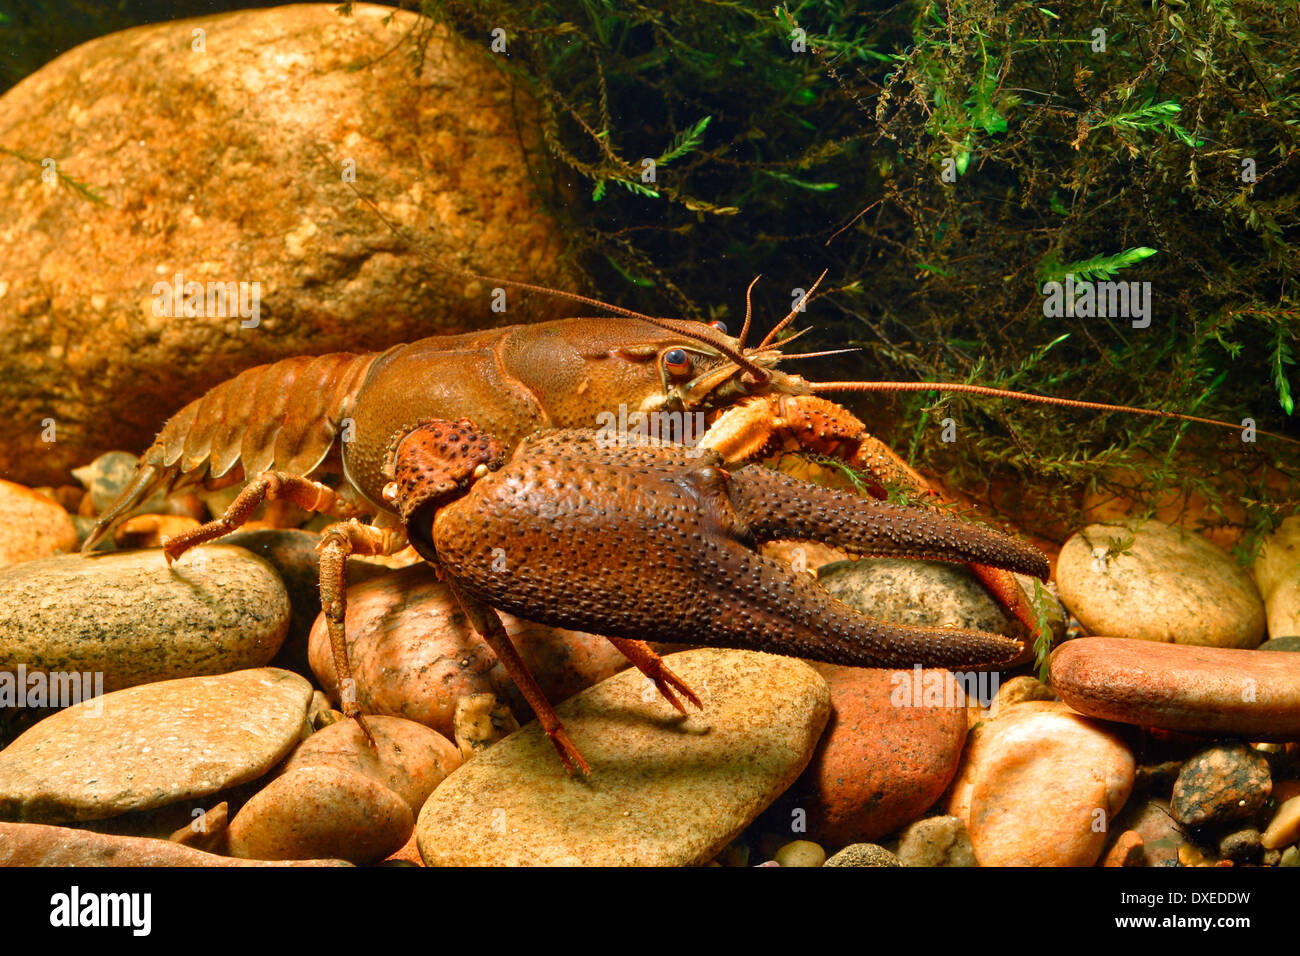 European crayfish, Noble crayfish, Europäischer Flusskrebs, Flußkrebs, Edelkrebs, Astacus astacus, Astacus fluviatilis Stock Photo